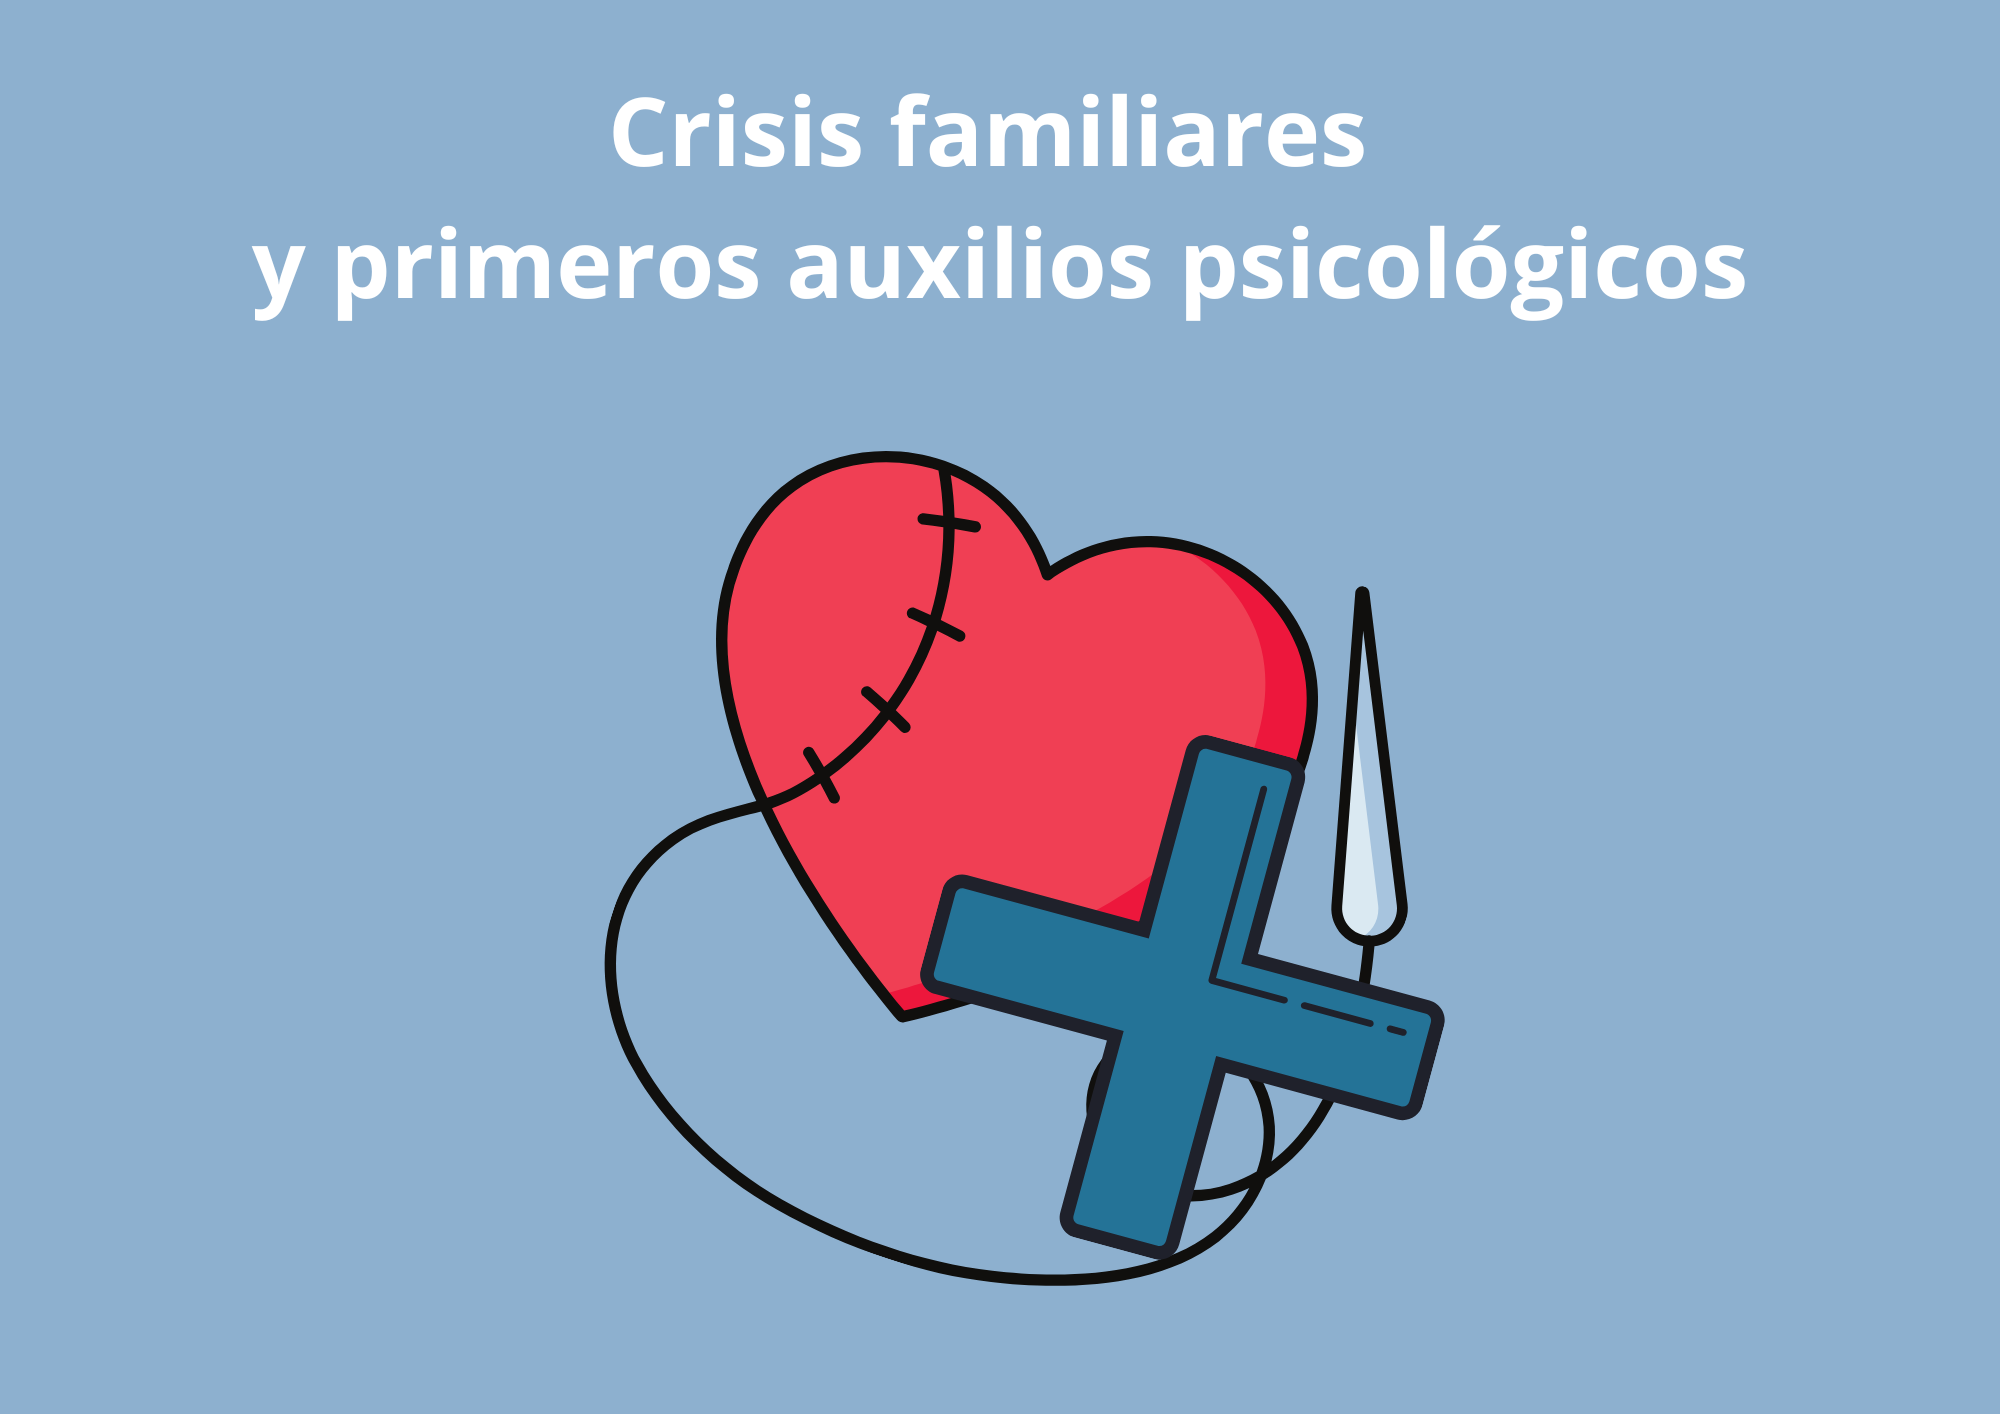 Crisis familiares y primeros auxilios psicológicos